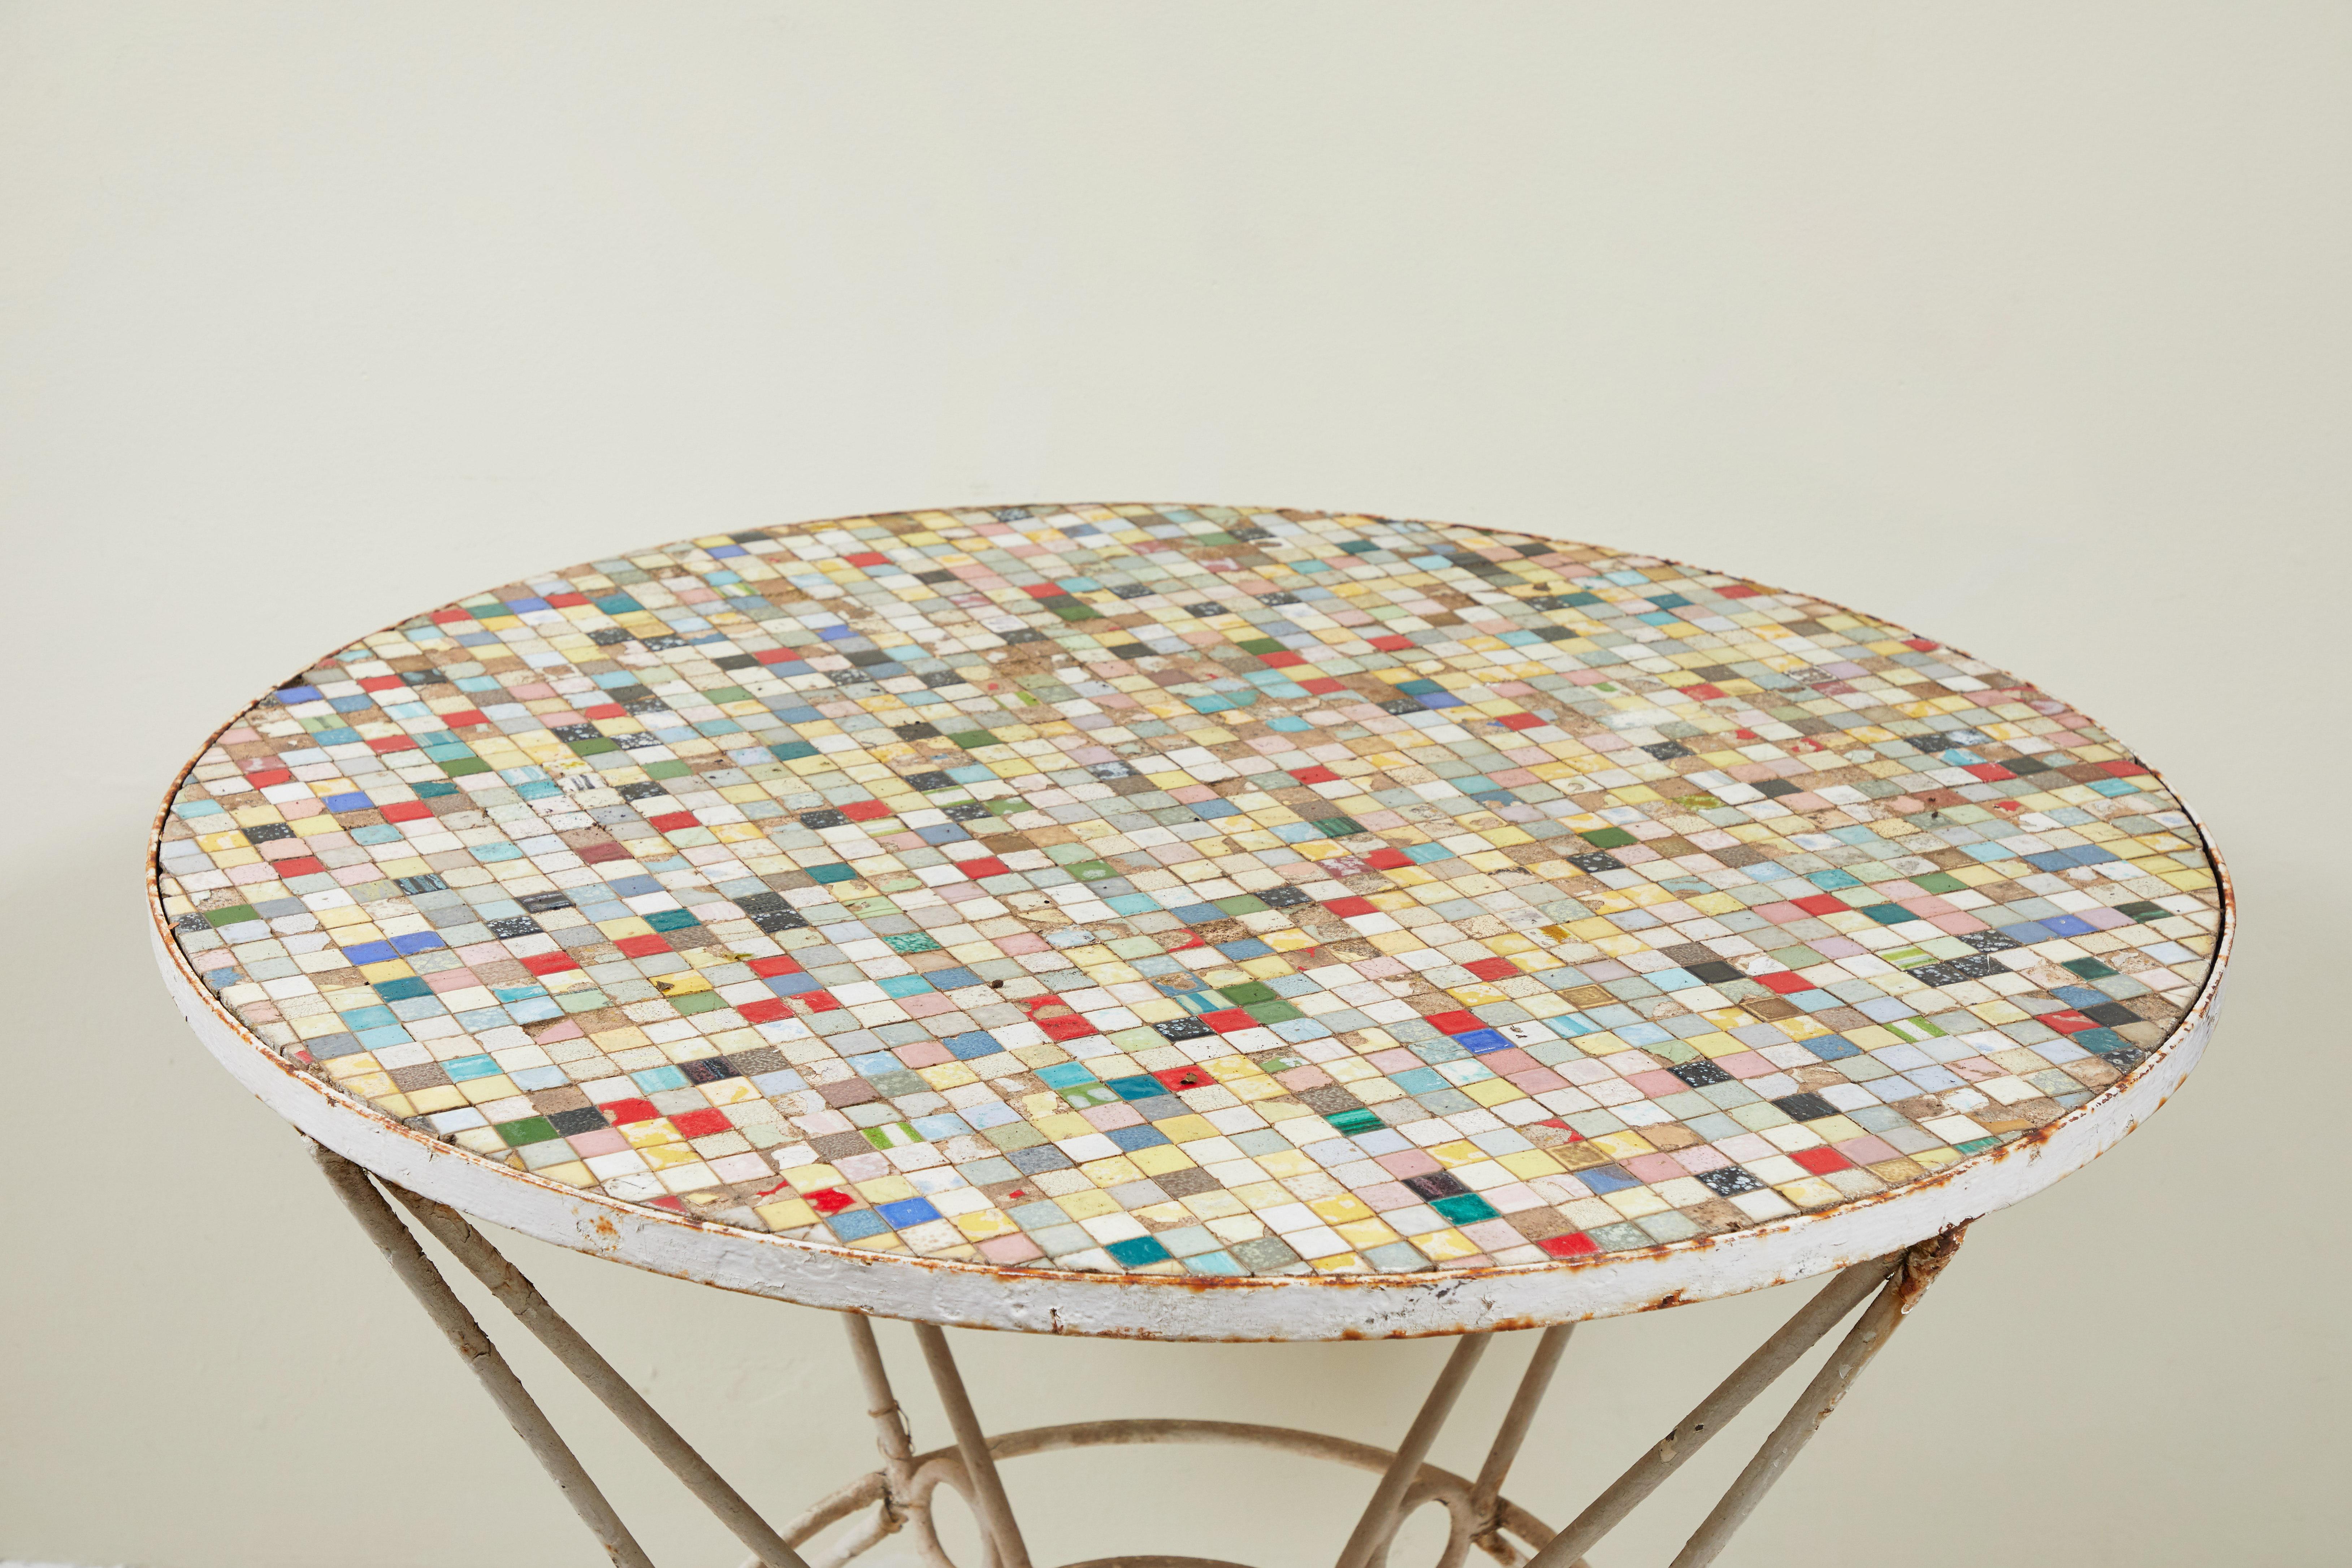 Metal Multicolored Tile Table